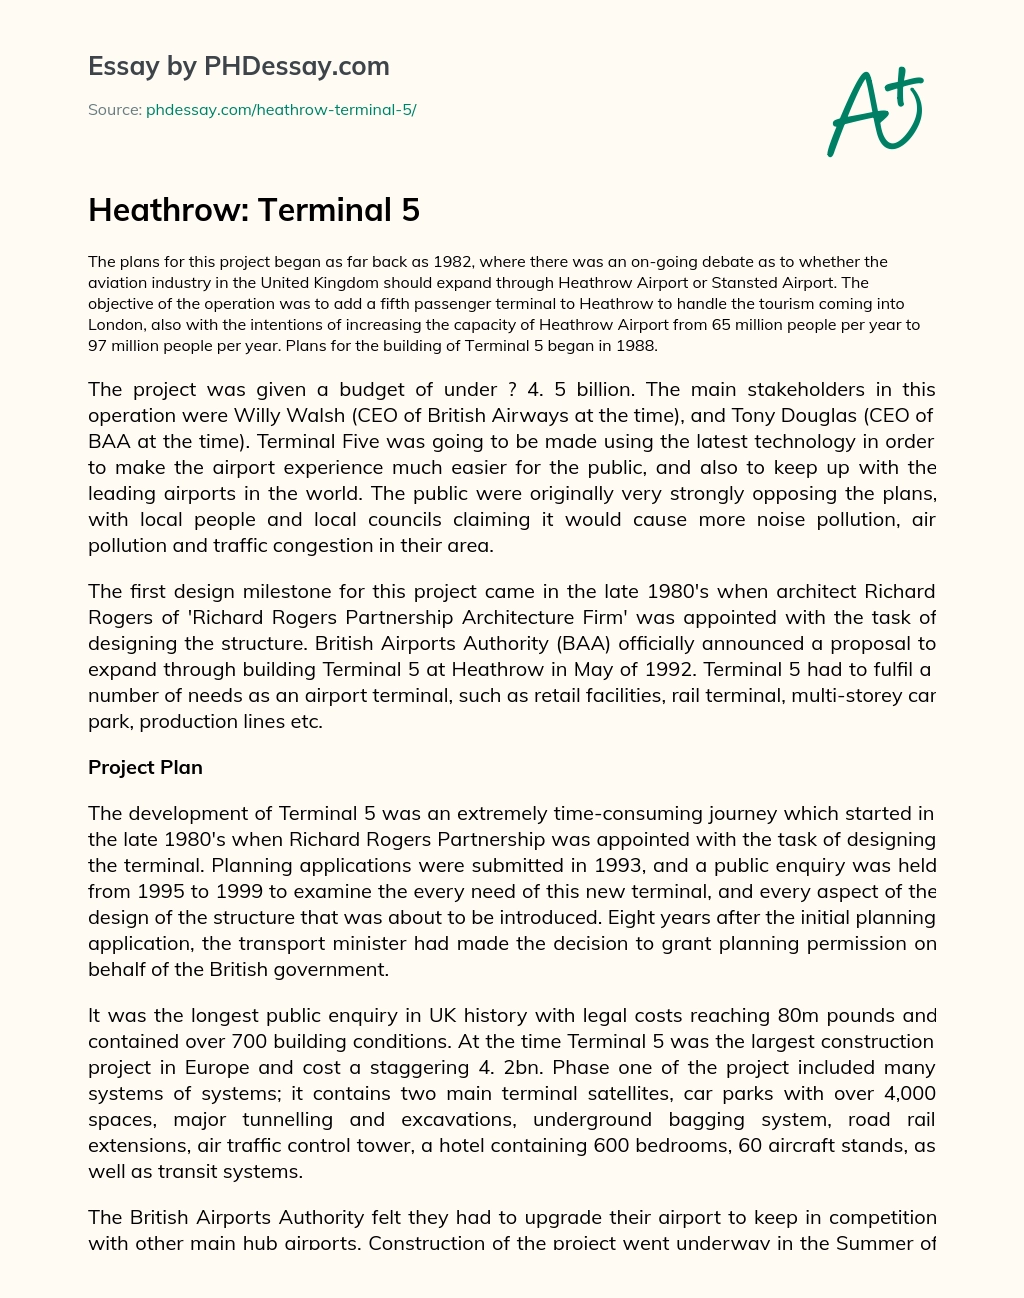 Heathrow: Terminal 5 essay